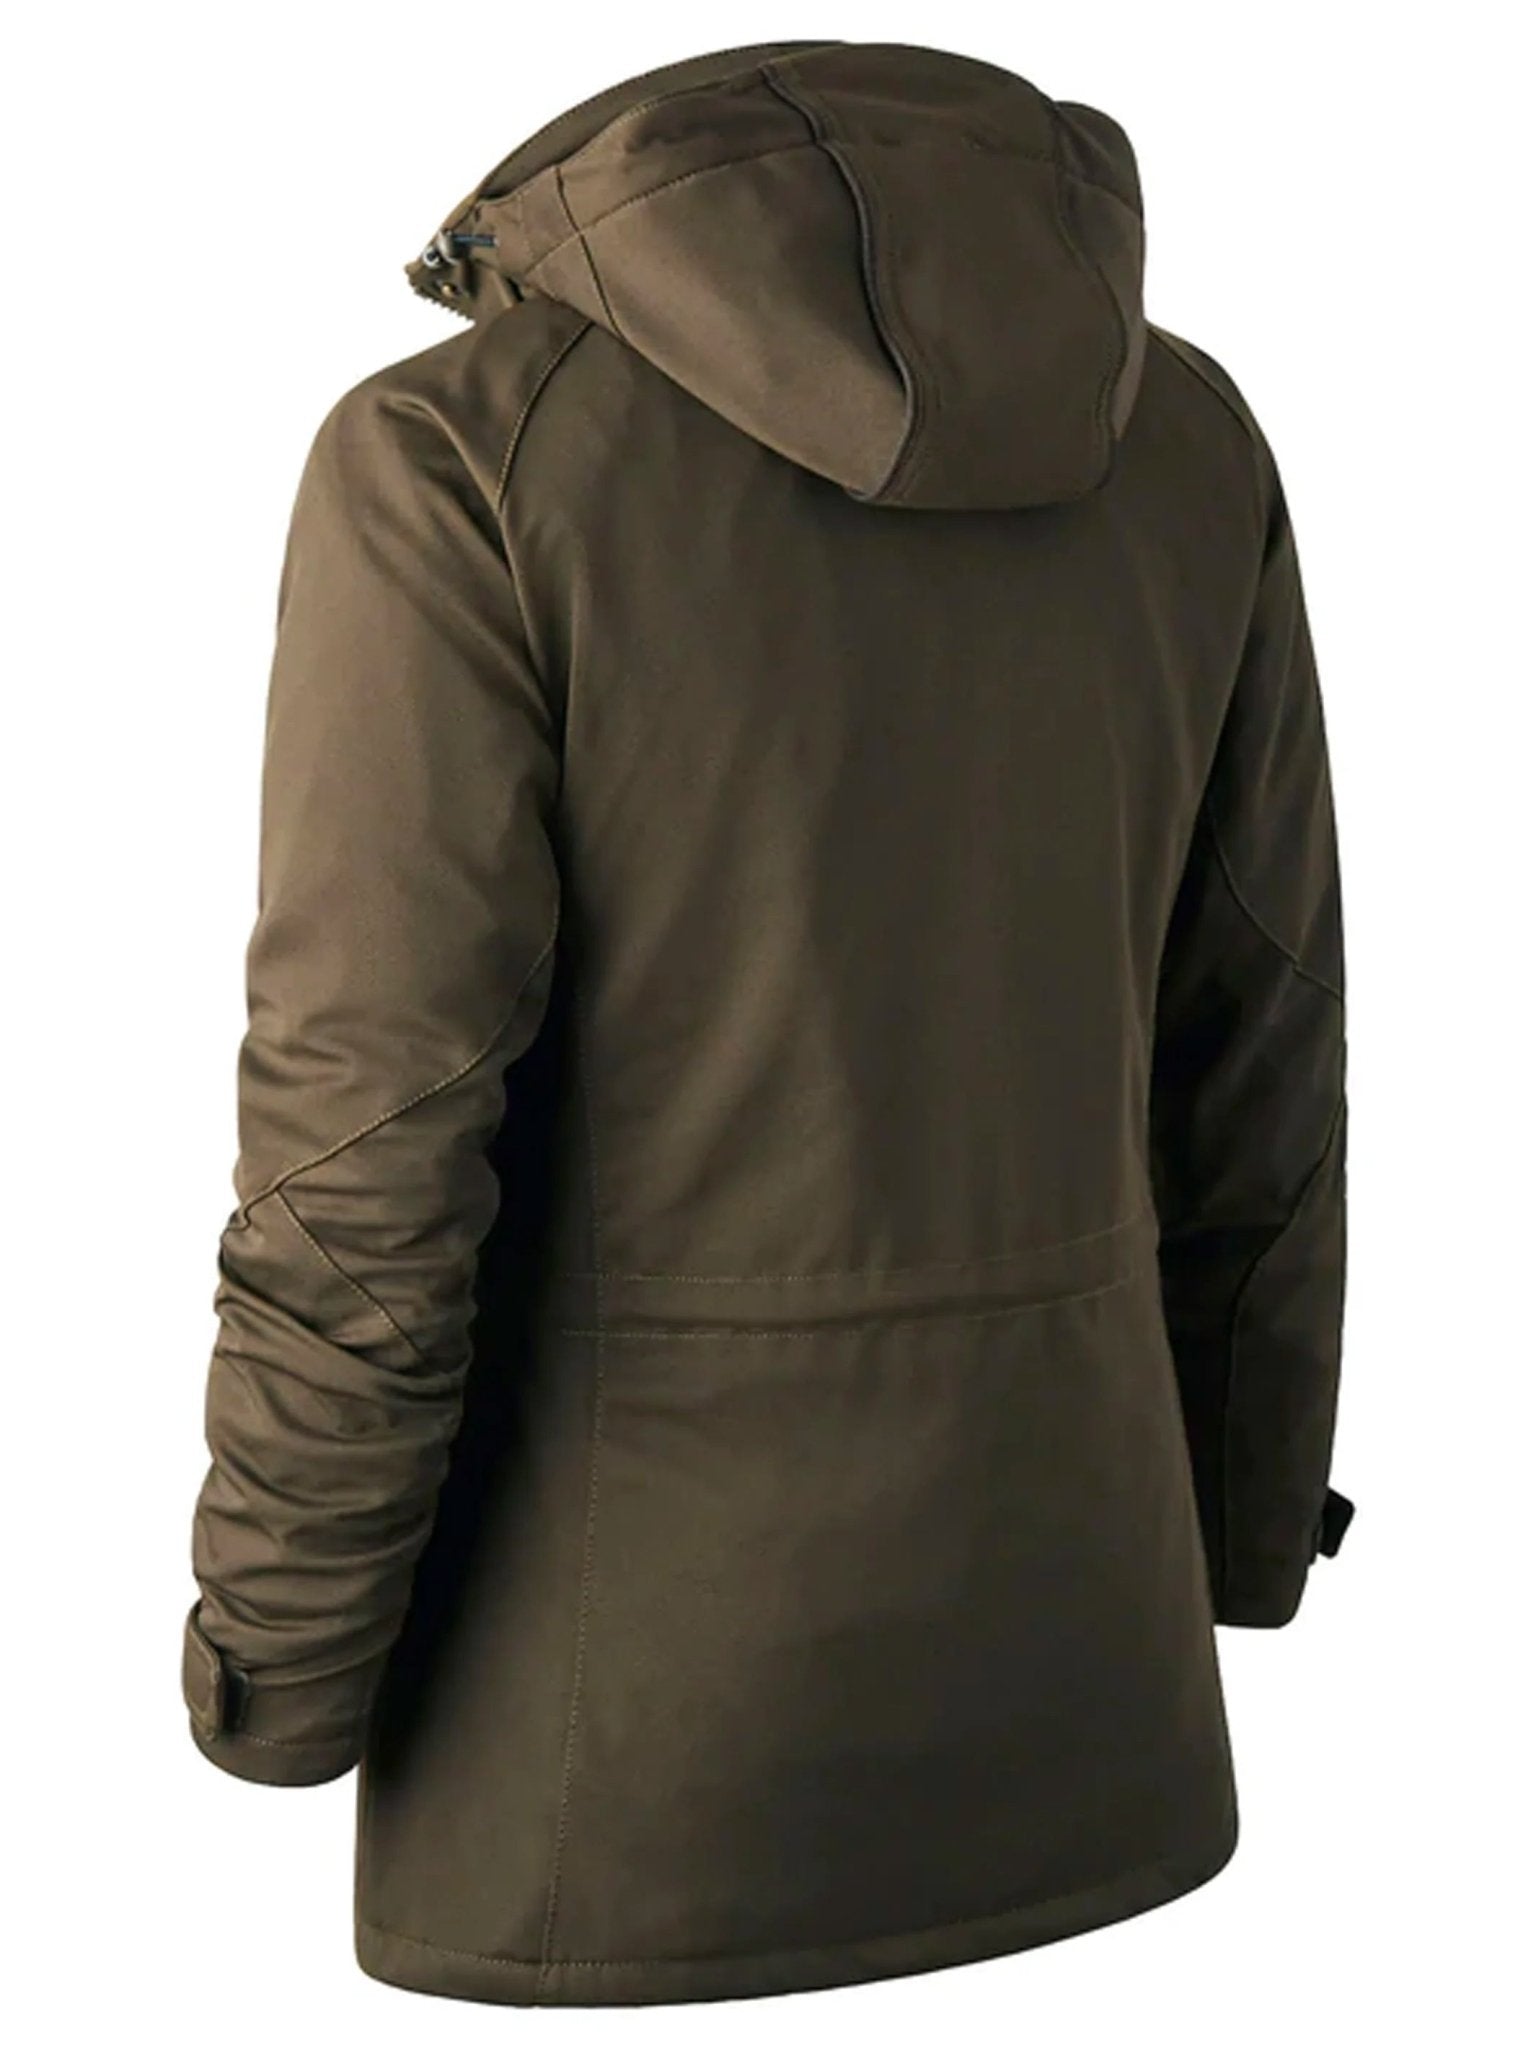 4elementsclothingDeerhunterDeerhunter - Lady Mary Waterproof Jacket insulated, windproof and breathableOuterwear5525-376-36